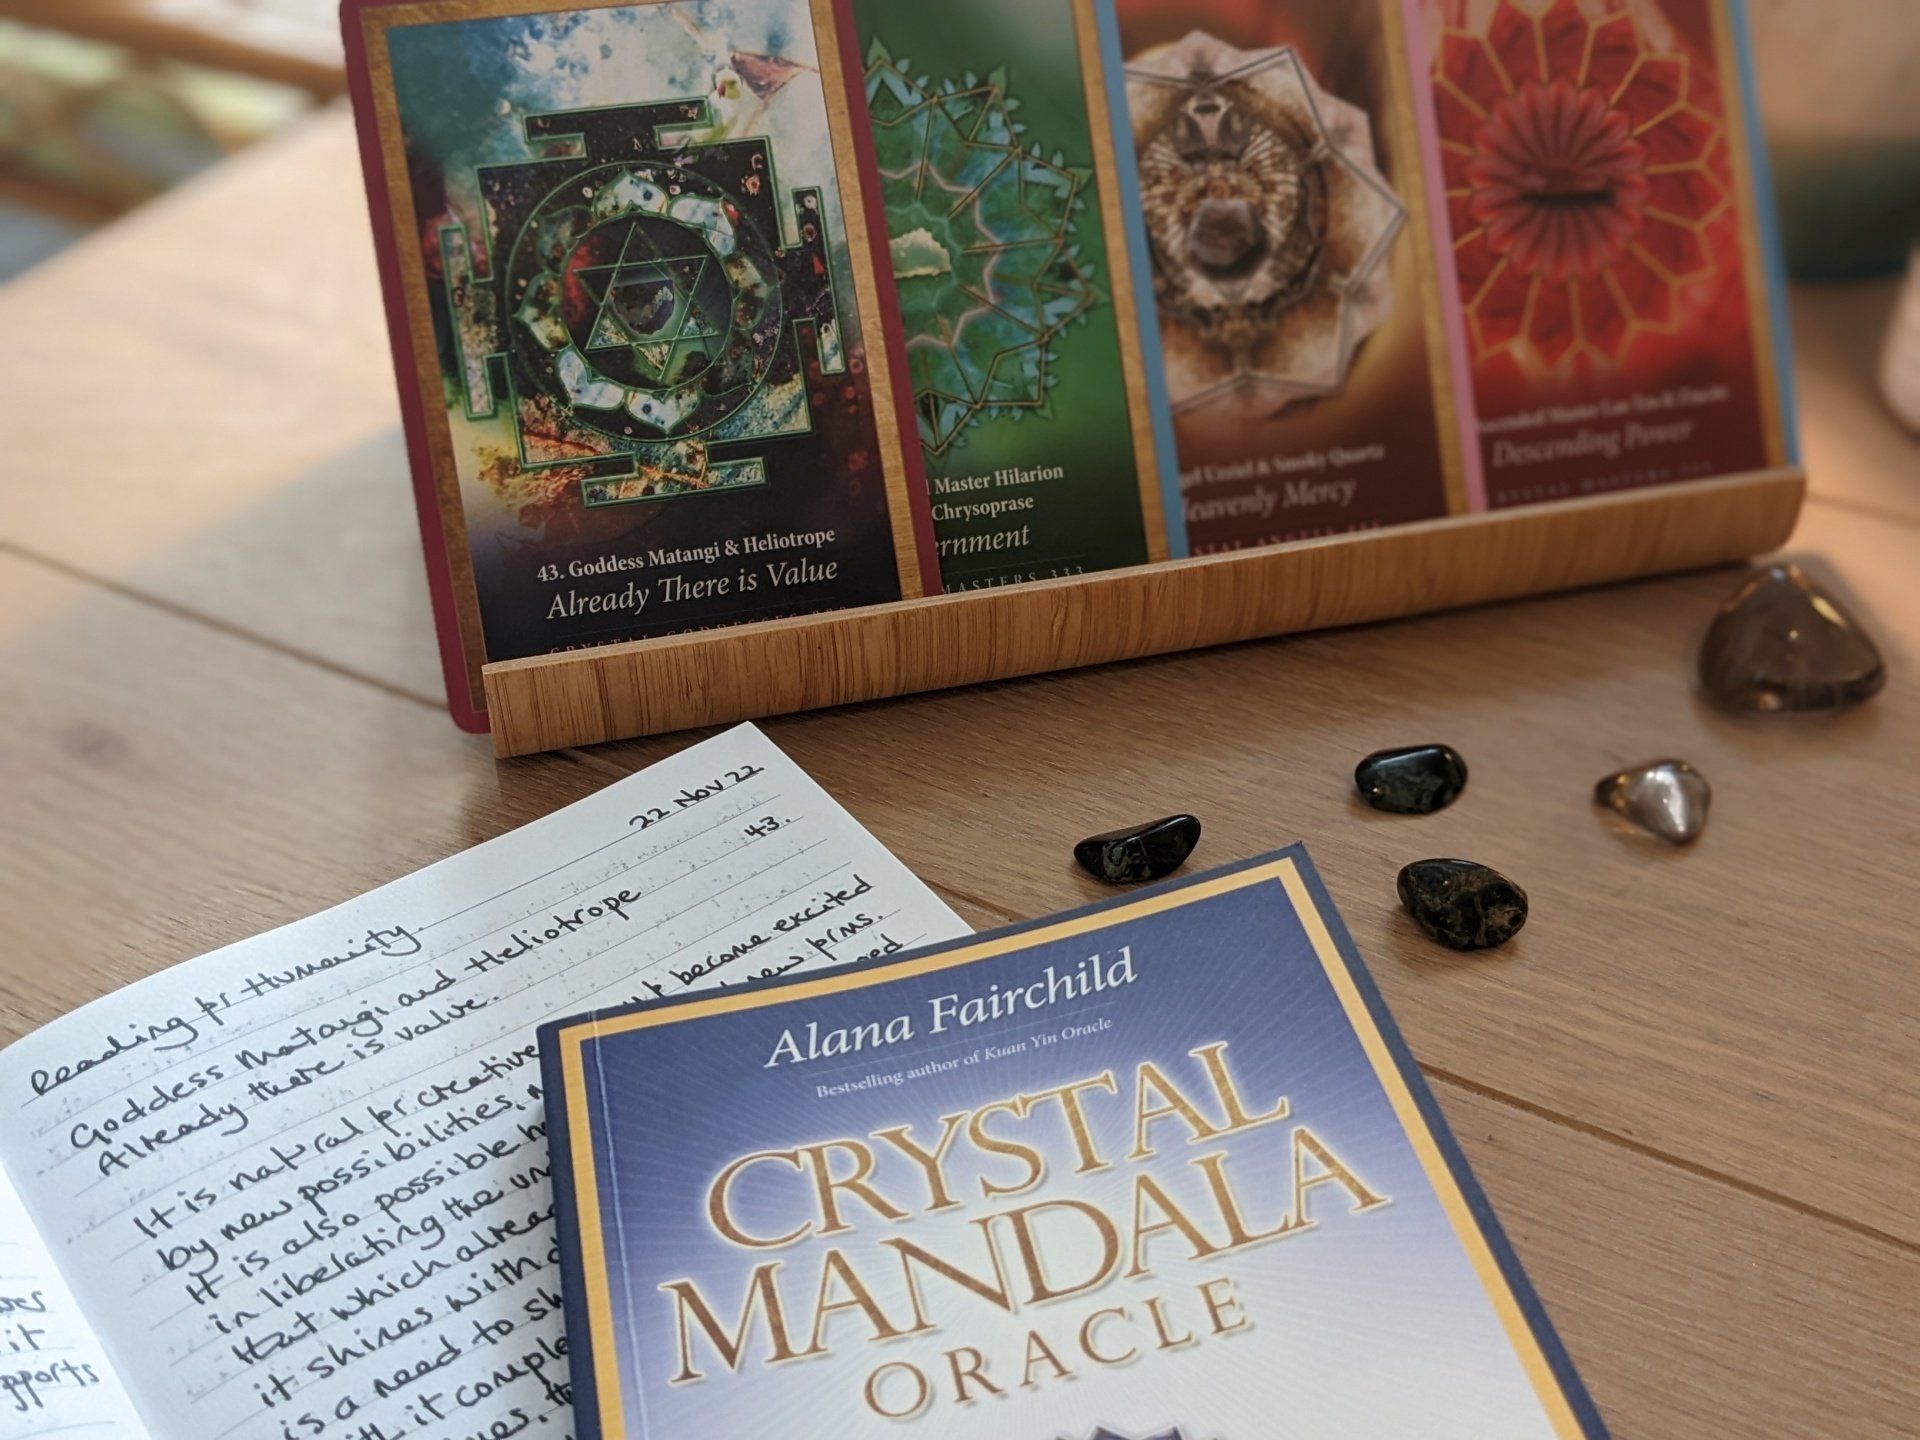 Crystal Mandala Oracle Cards and Guide by Alana Fairchild